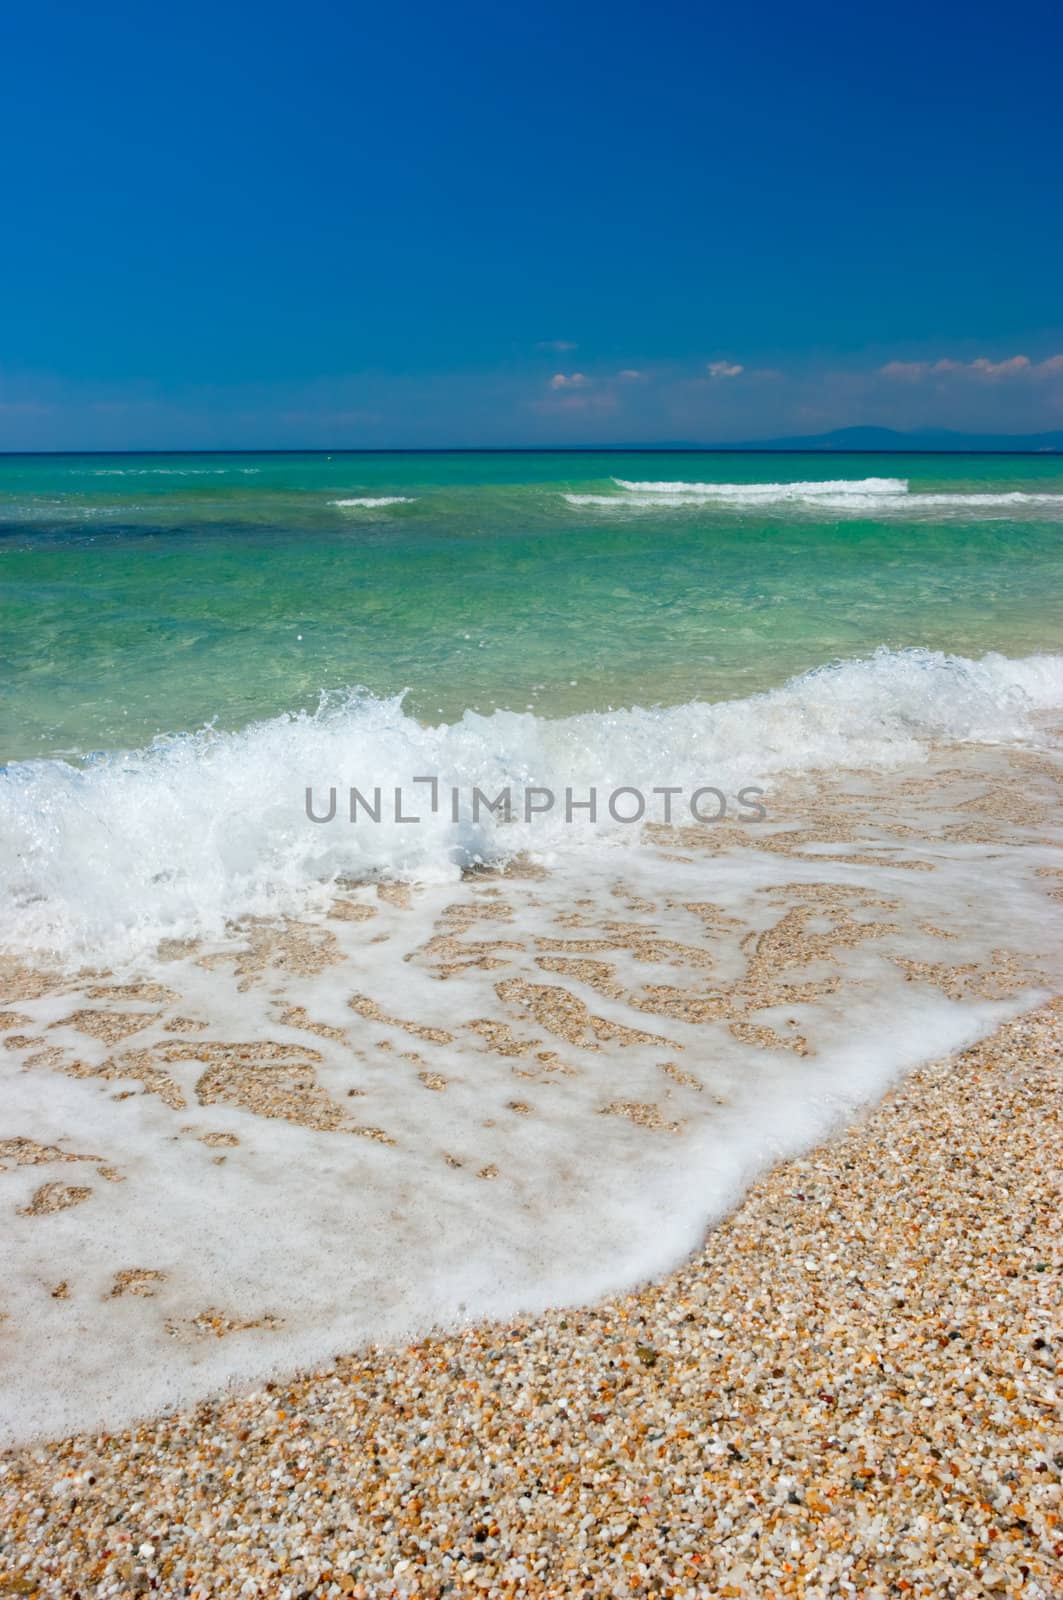 Waves on a pebbly sea shore